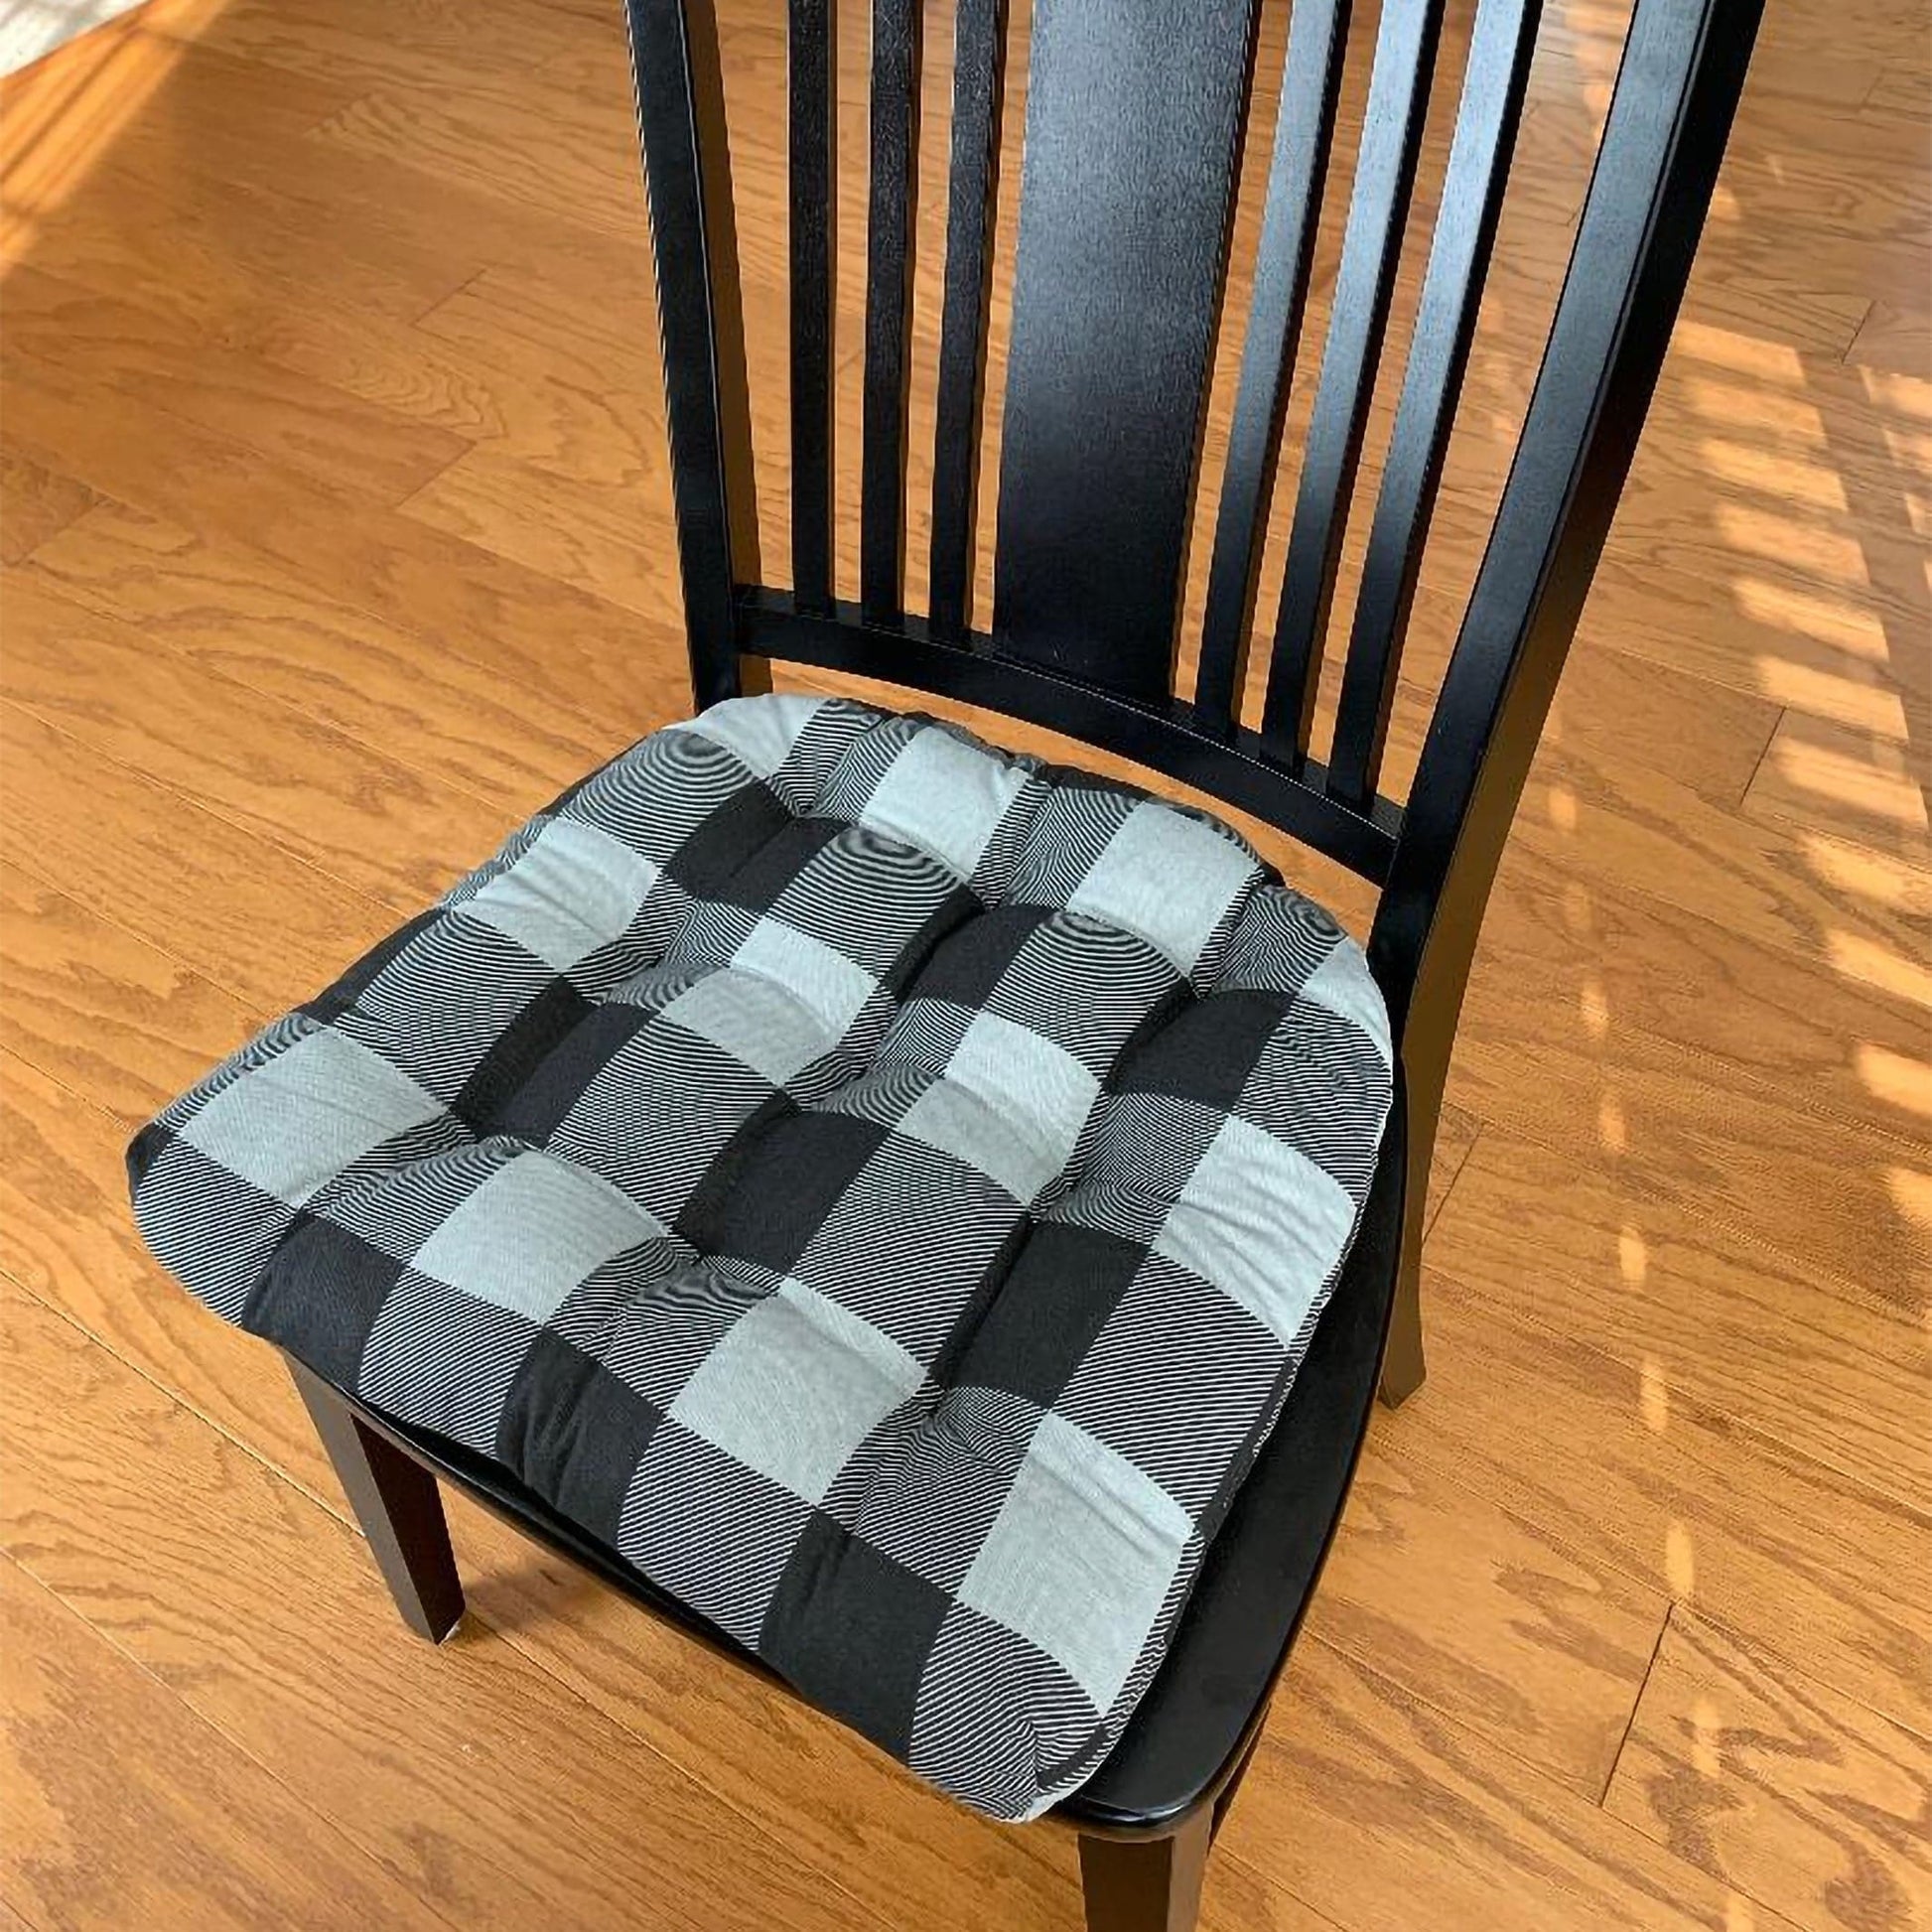 Barnett Home Decor Buffalo Black and Grey Dining Chair cushions on black dining room chair